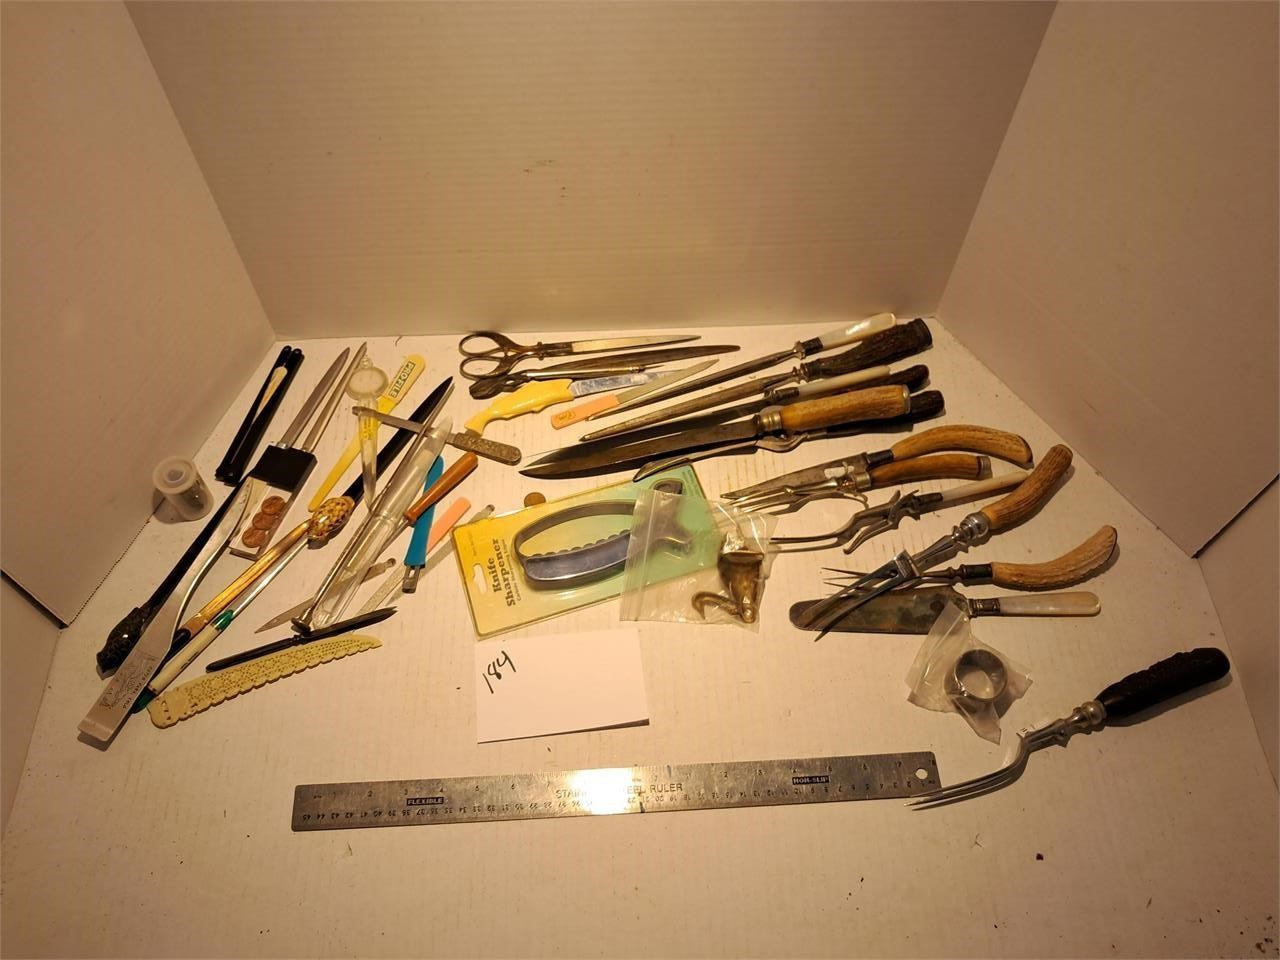 Bone handle utensils and more